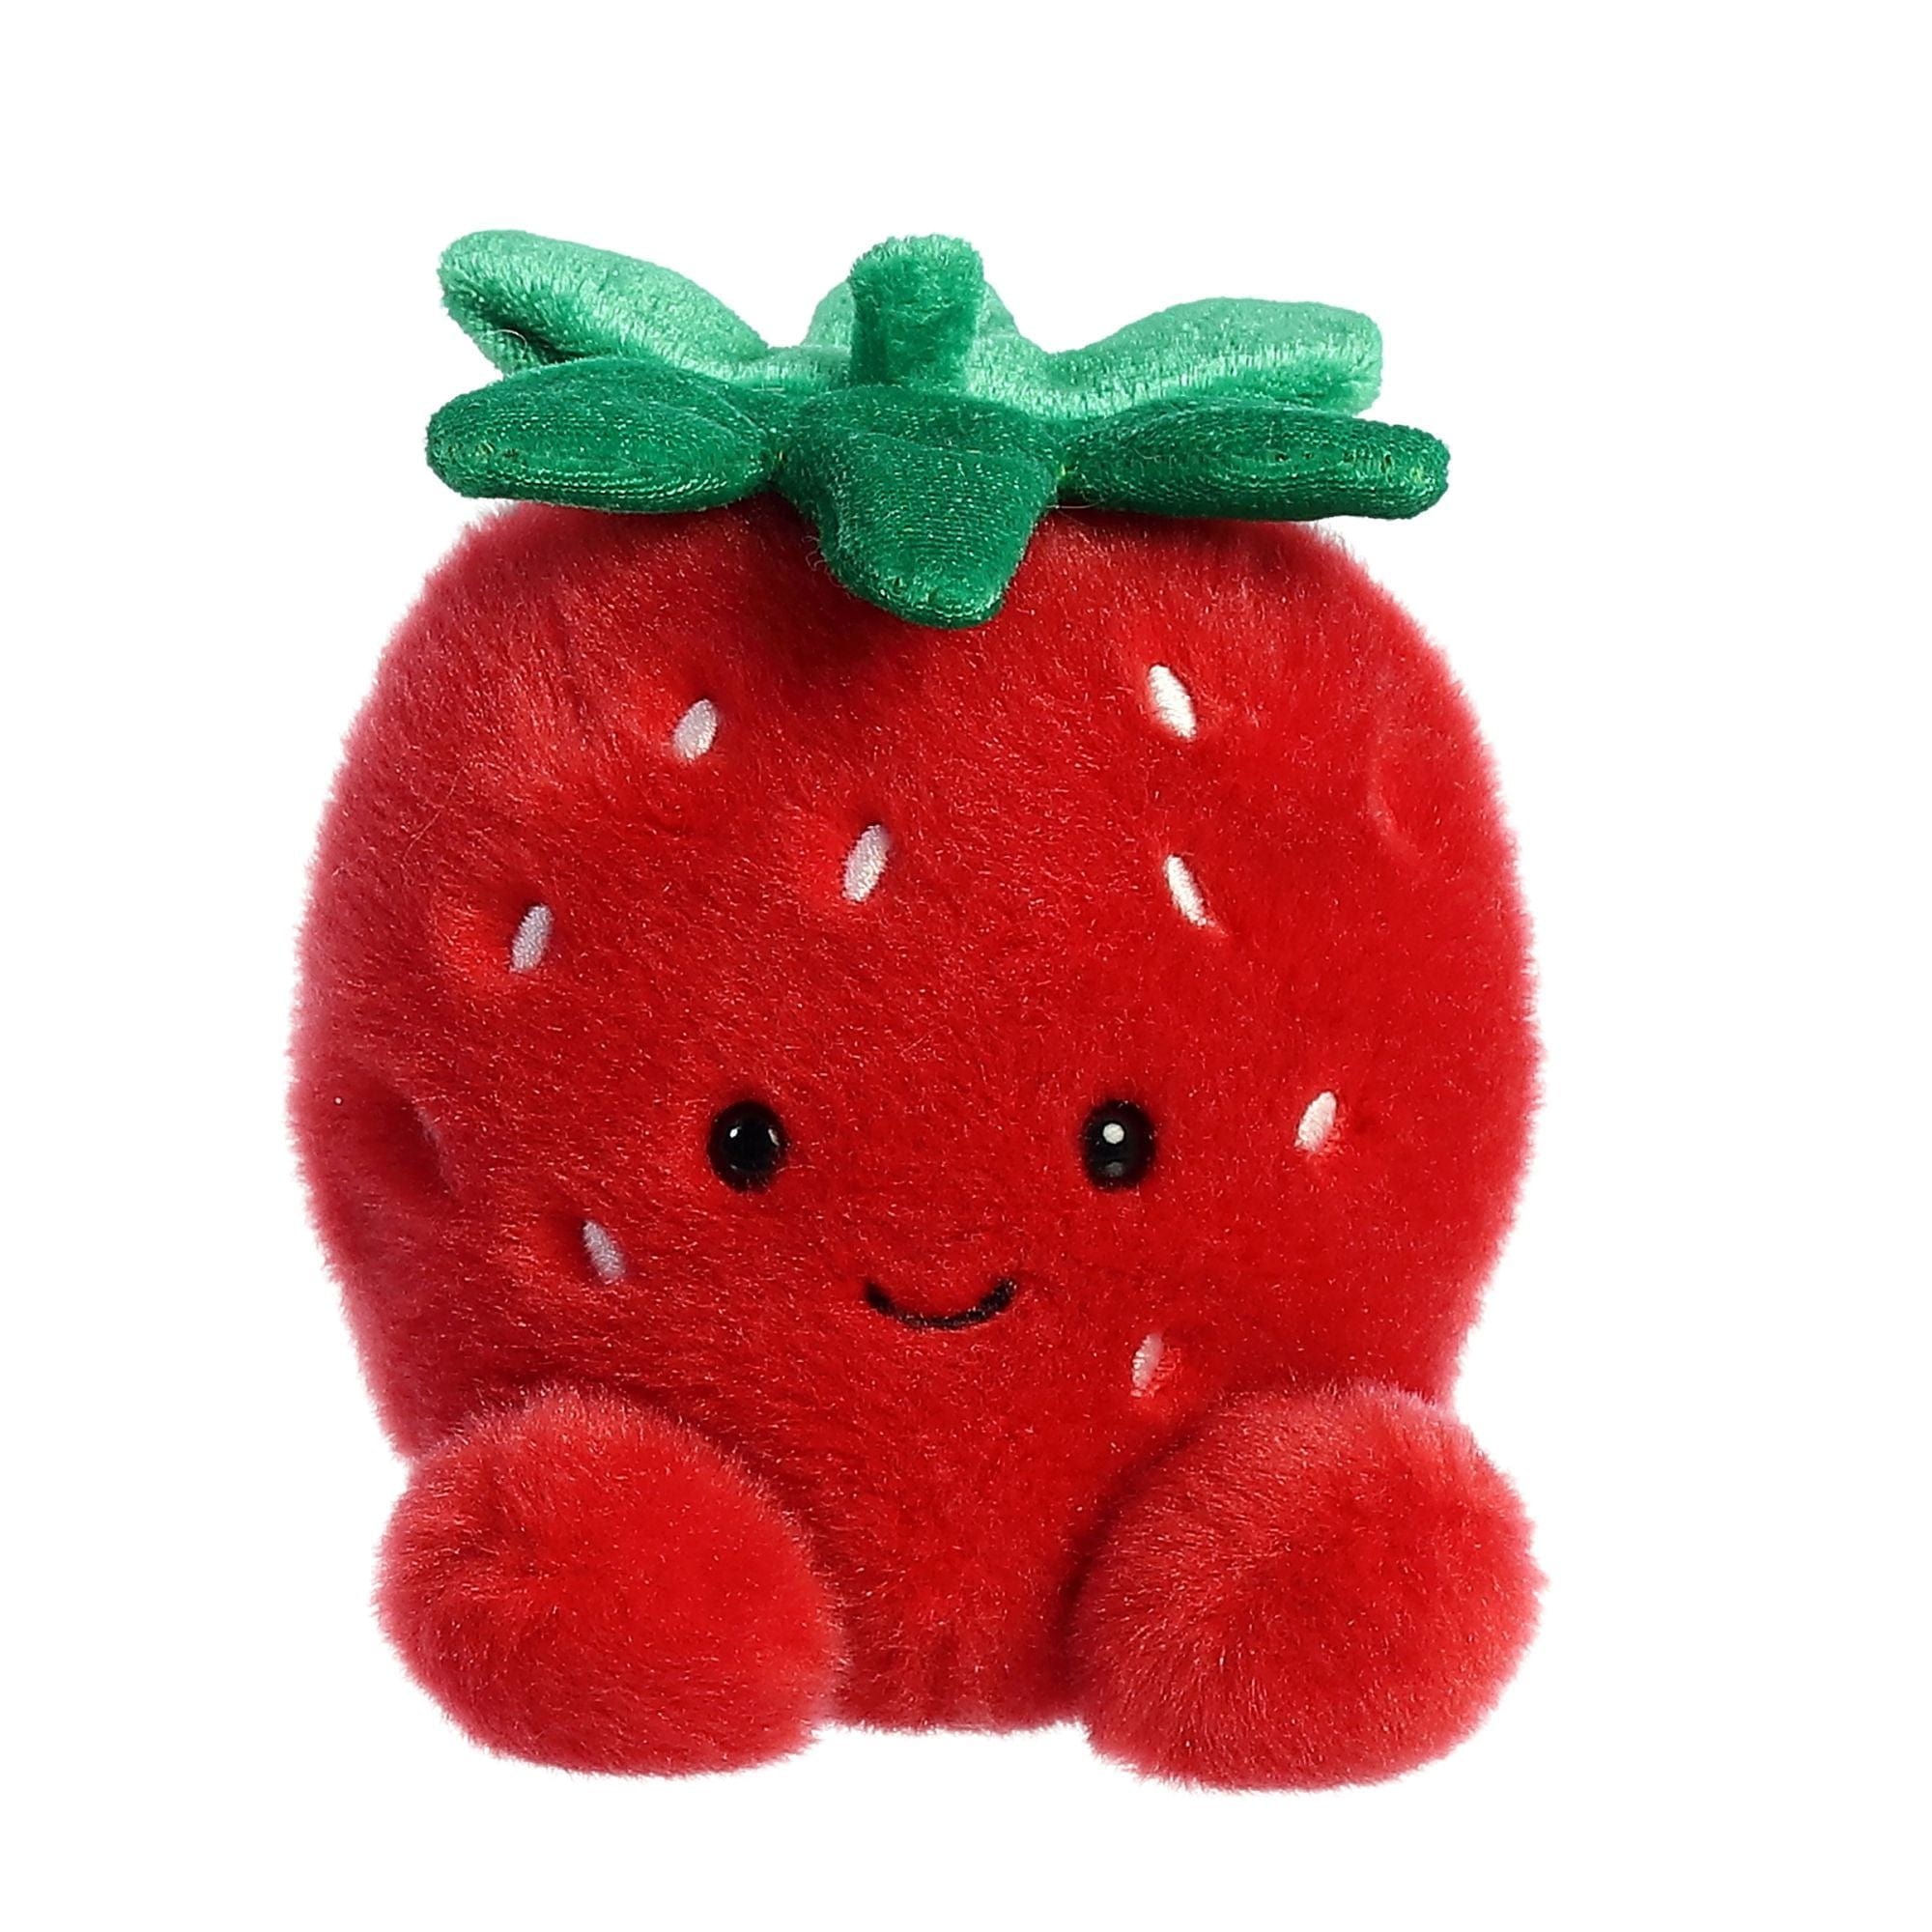 Aurora Juicy Strawberry, Jolly Green Apple & Mellow Peach Palm Pals 5" Plush Juicy Strawberry Kawaii Gifts 092943335738